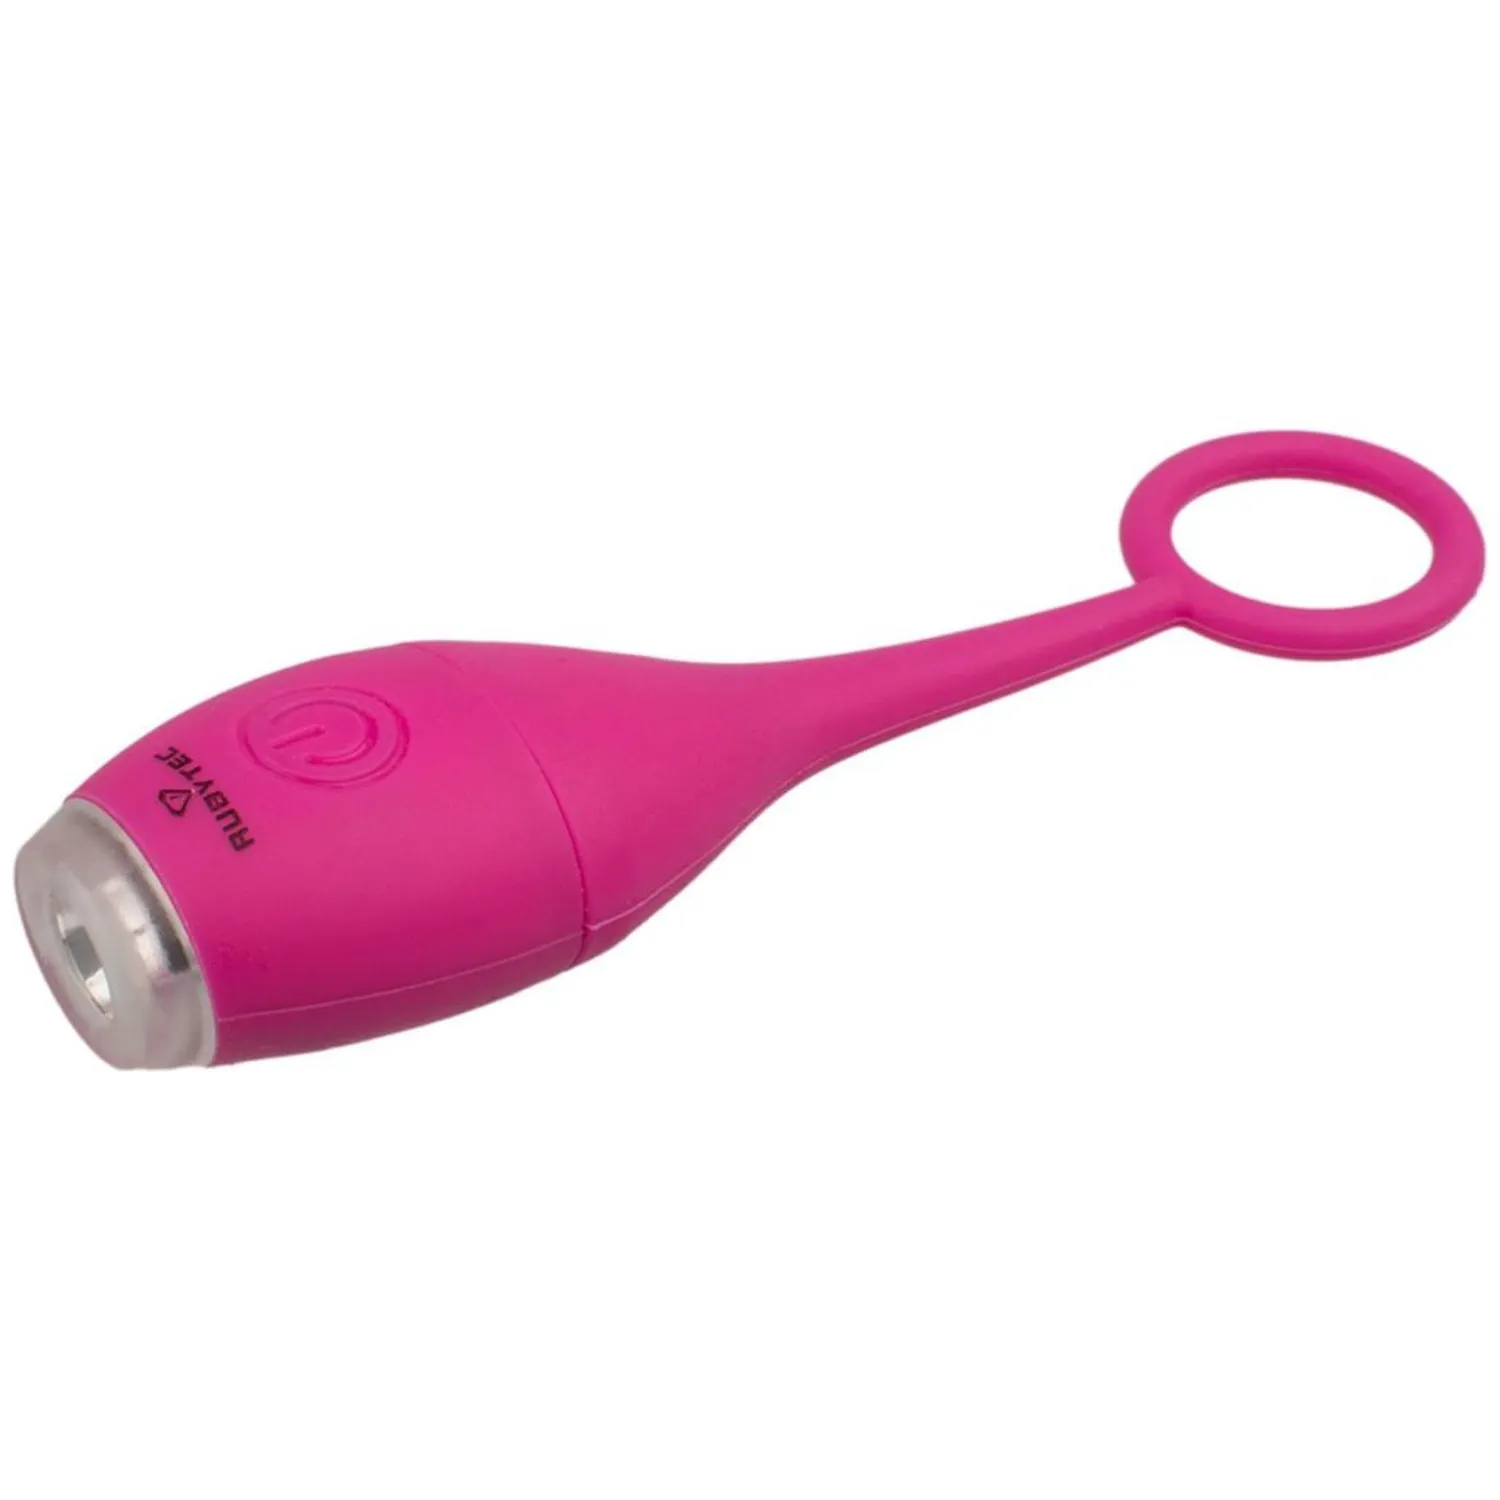 rubytec-tetra-usb-flashlight-dark-pink-dark-pink-0.jpg